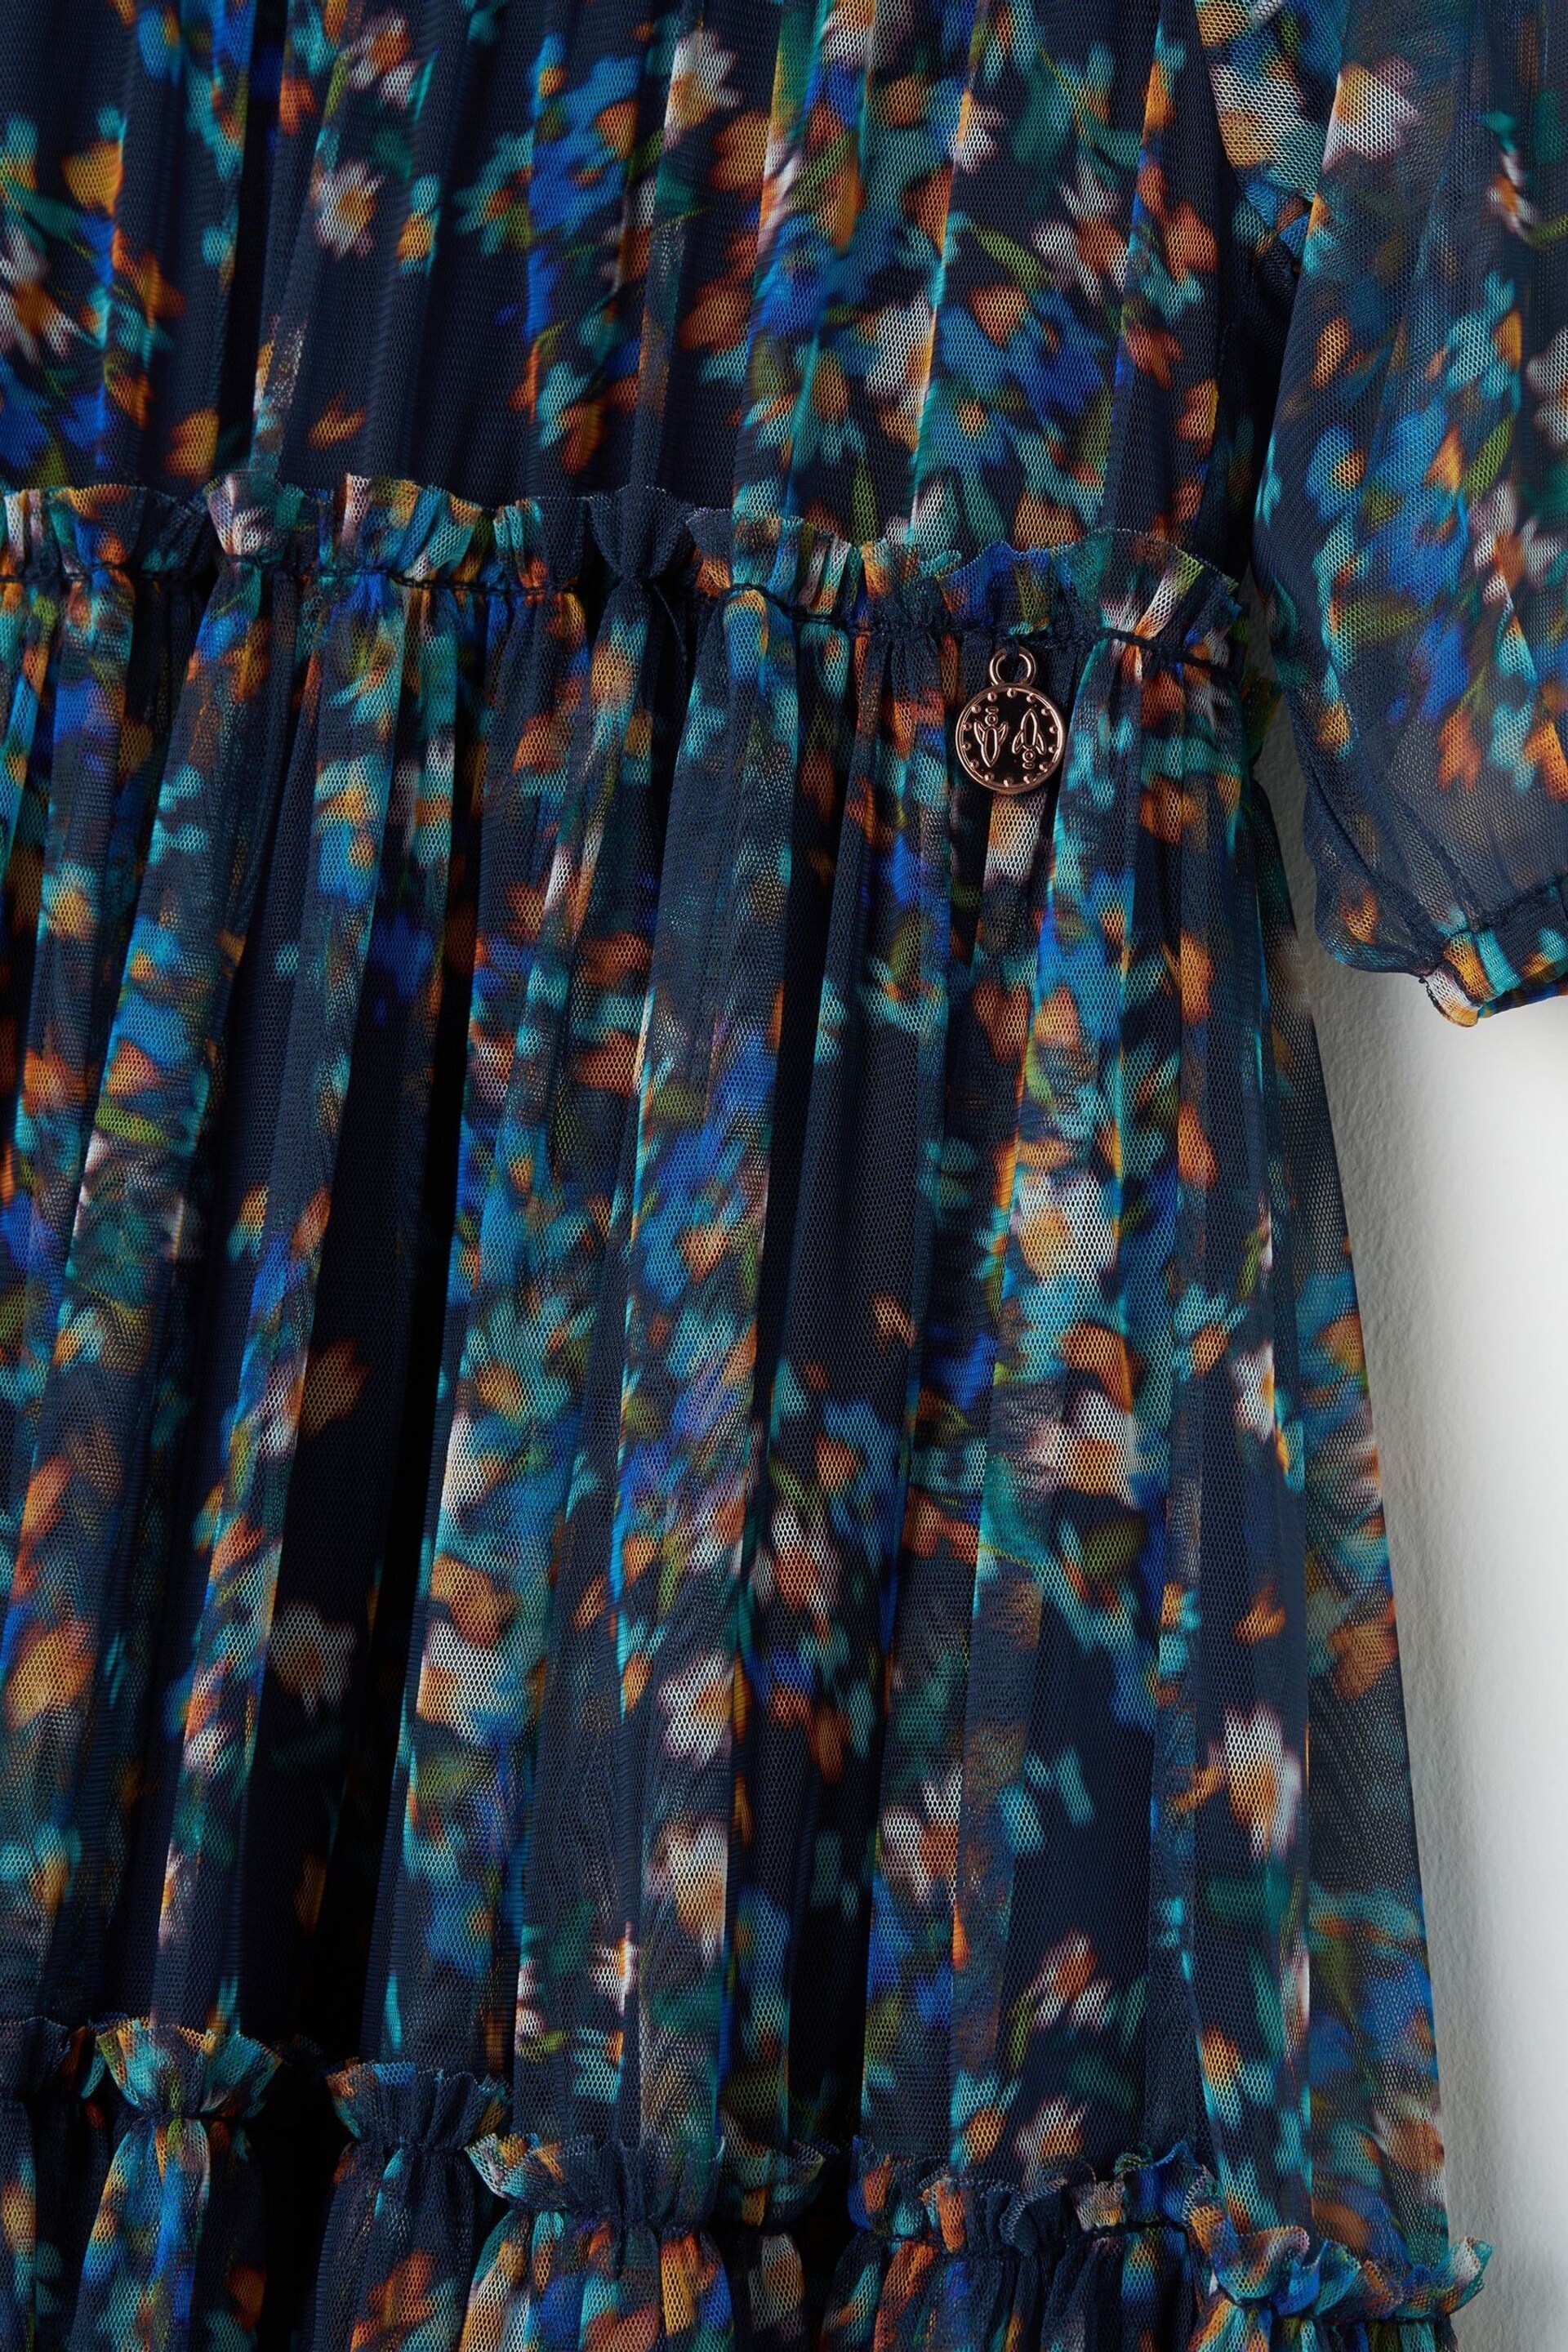 Angel & Rocket Navy Blue Floral Eleanor Print Mesh Dress - Image 7 of 7